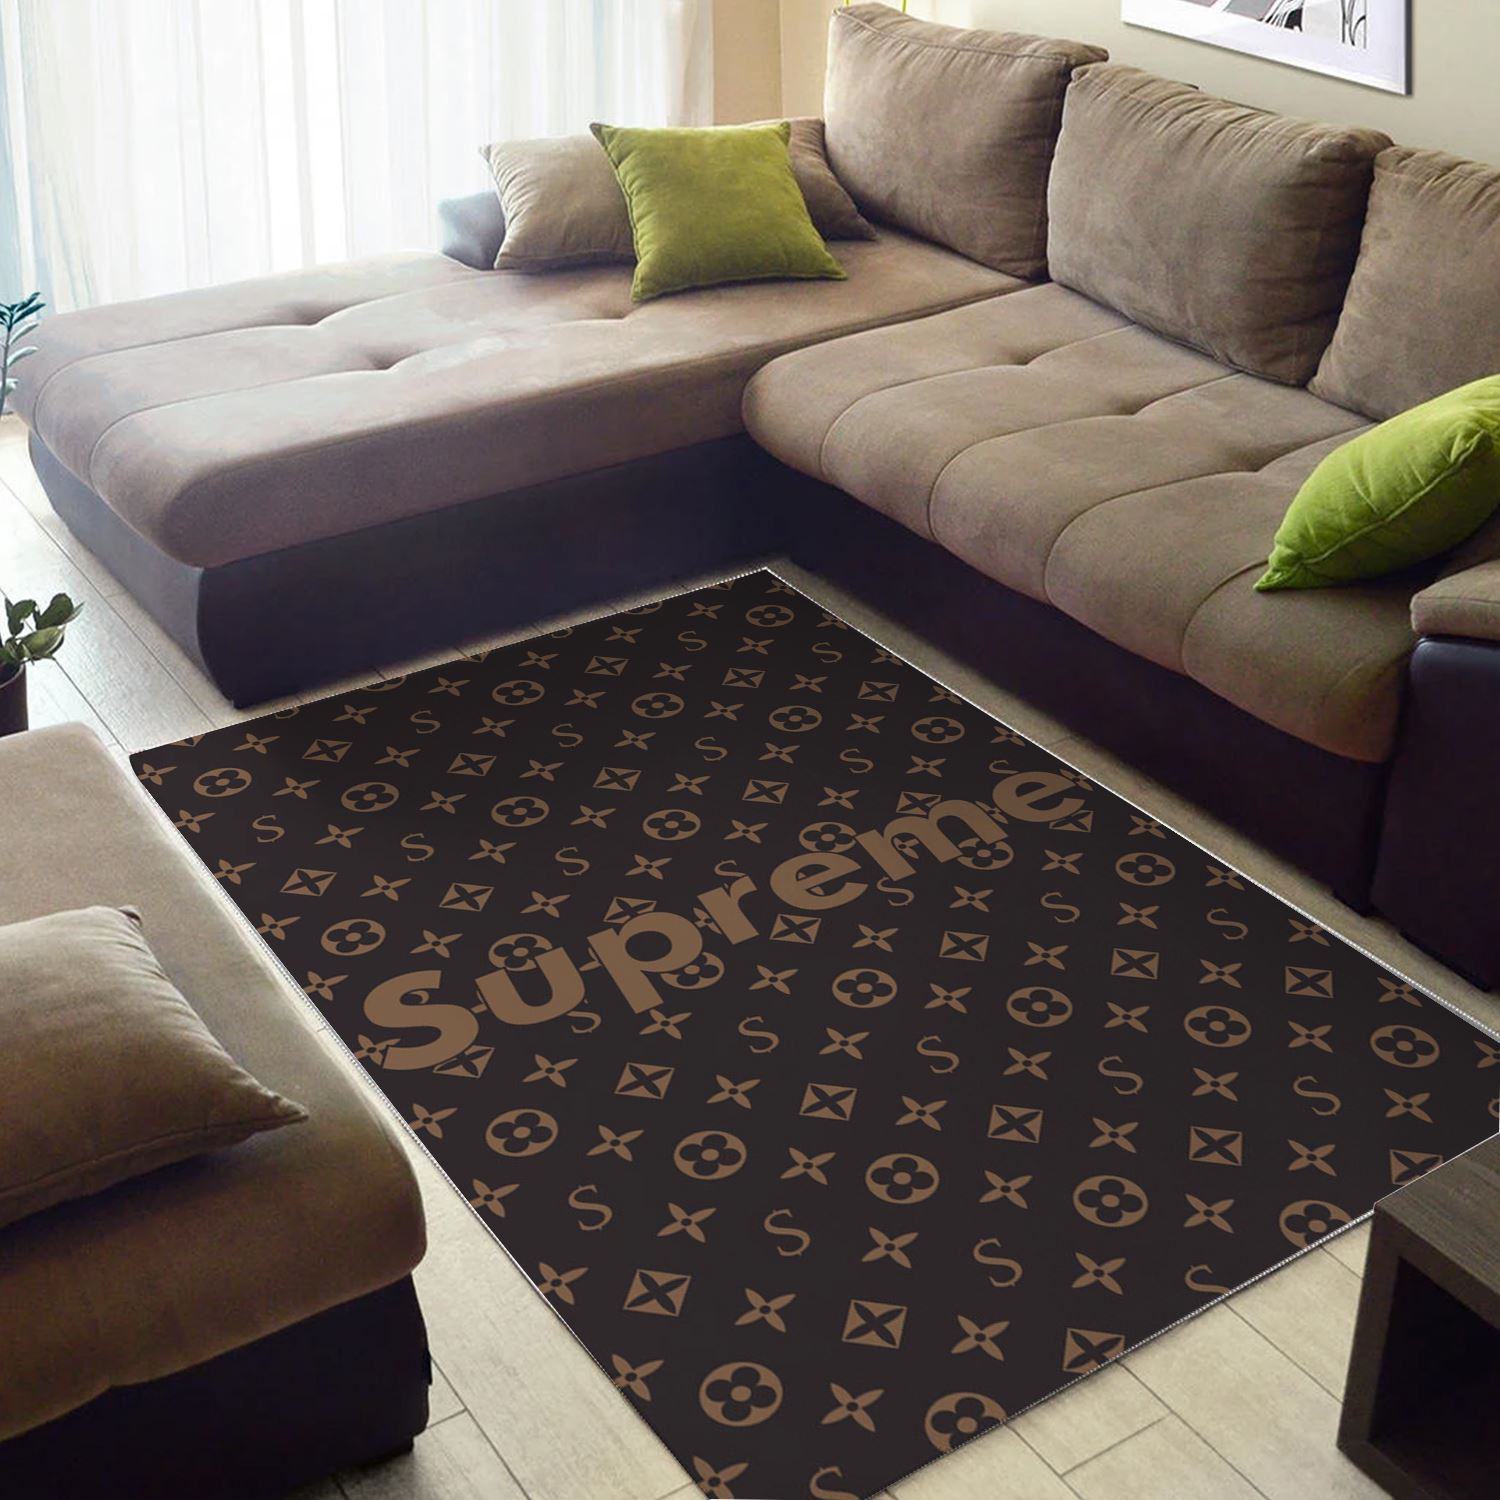 Louis Vuitton Supreme Brown Rectangle Rug Luxury Home Decor Fashion Brand Door Mat Area Carpet